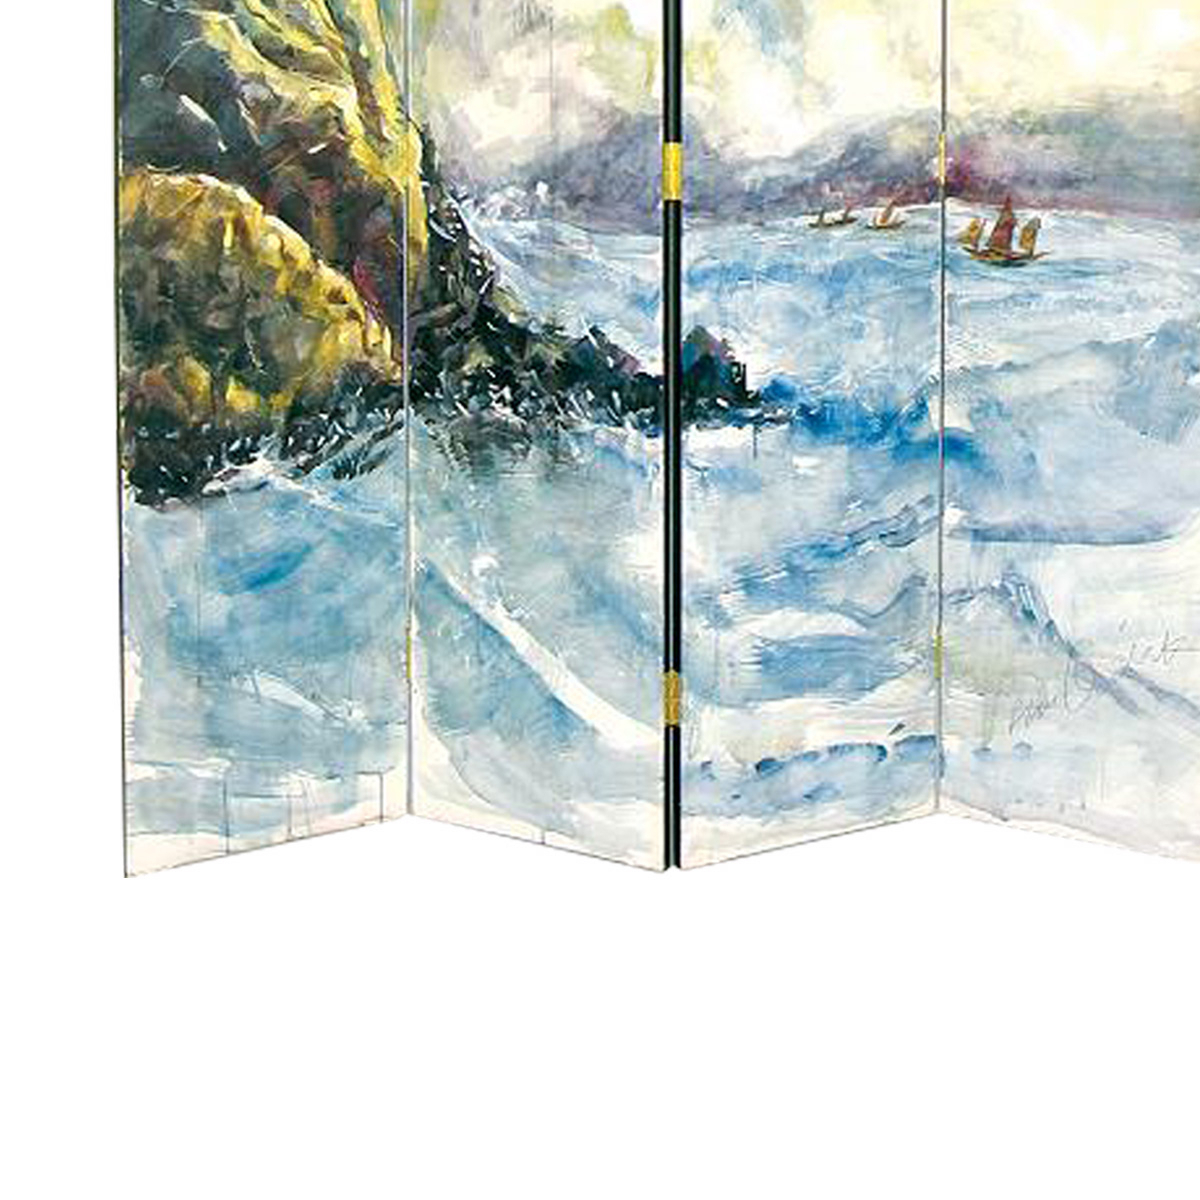 Wooden 4 Panel Room Divider With Landscape Scene, Multicolor- Saltoro Sherpi